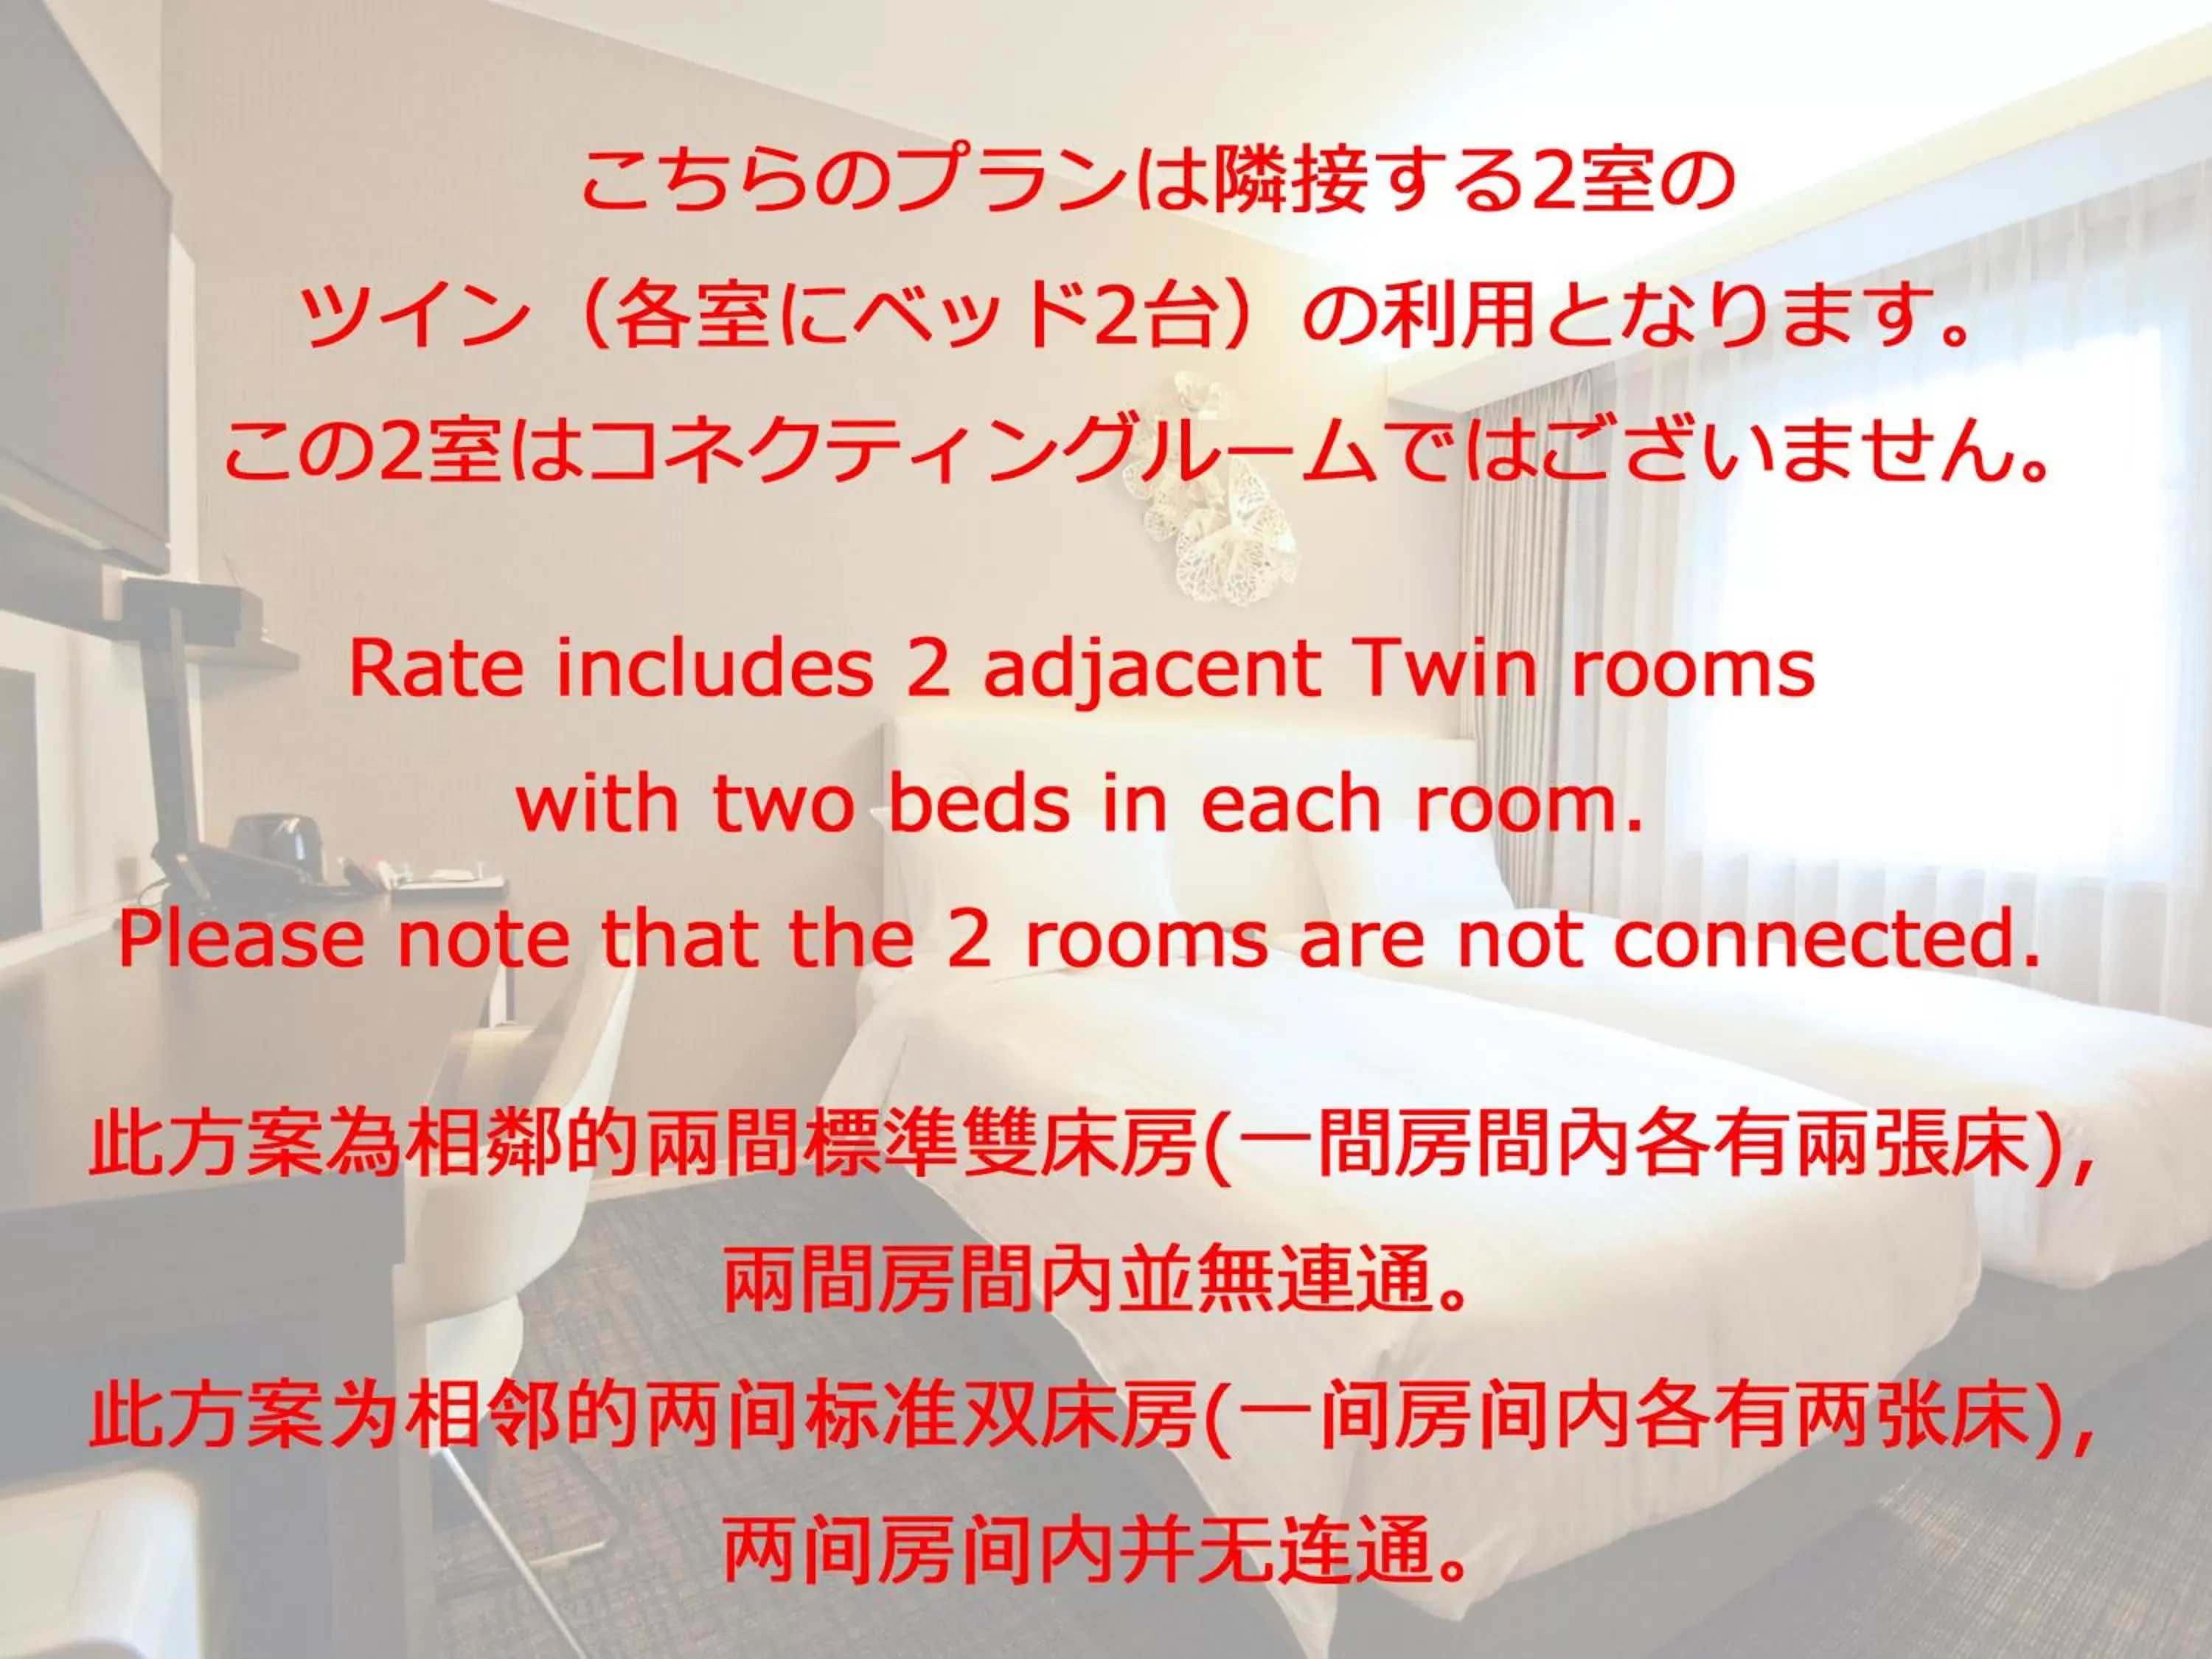 Adjoining Twin Room - Non Smoking in Premier Hotel -CABIN PRESIDENT- Osaka